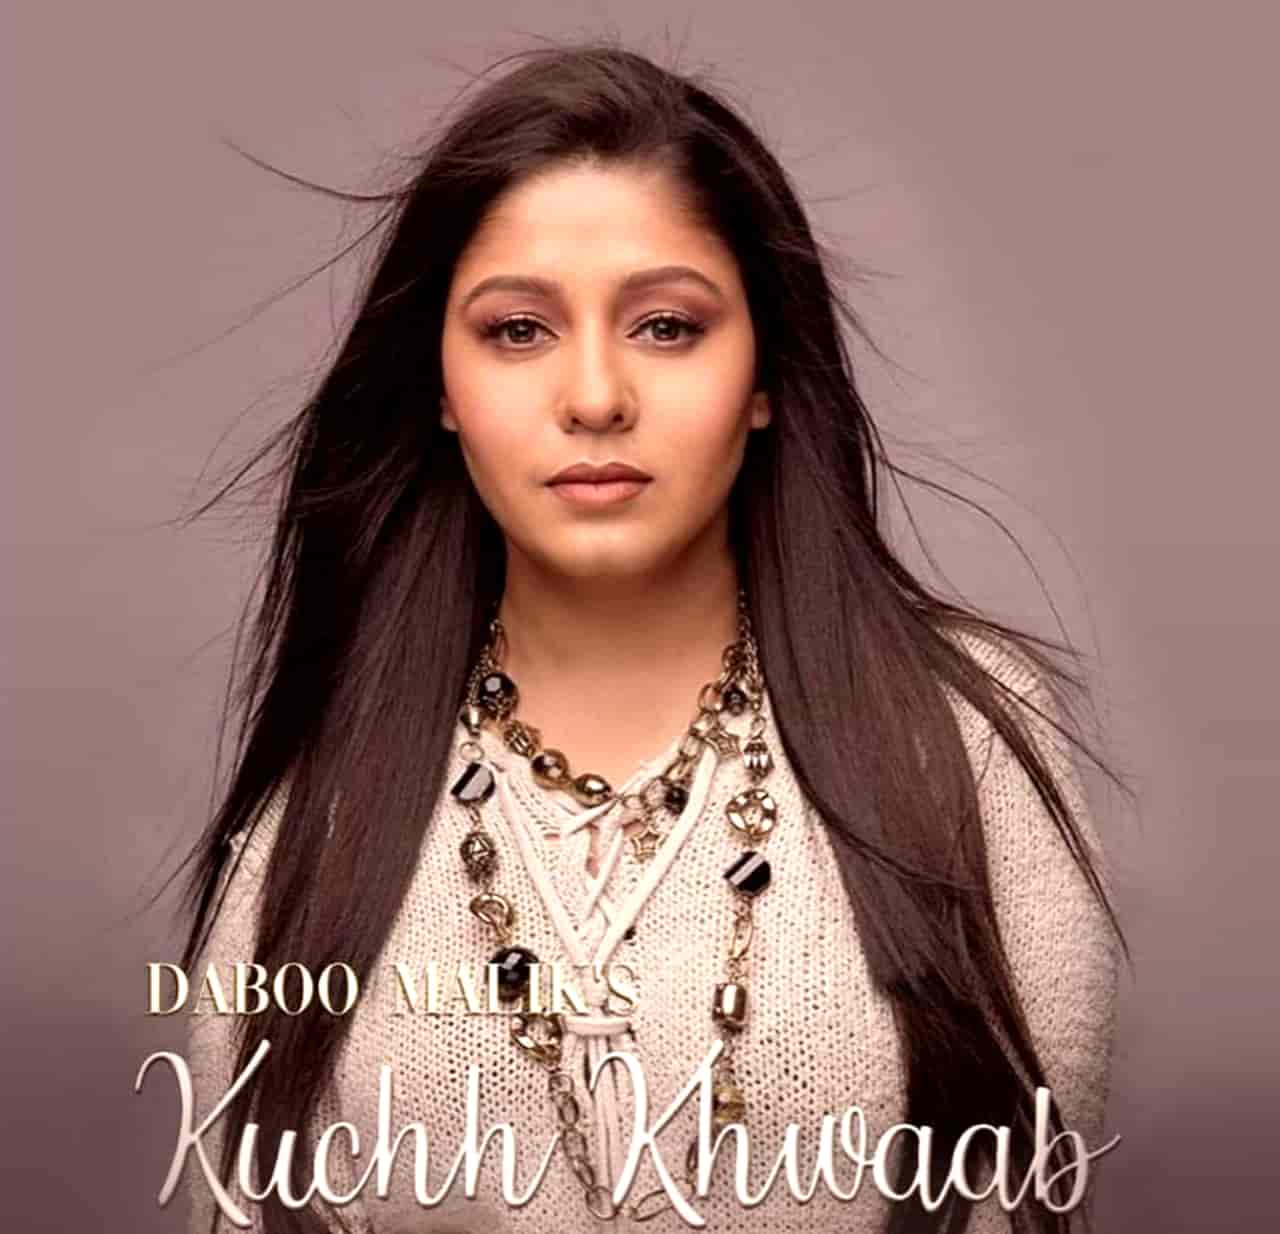 kuchh khwaab, Kuchh Khwaab Lyrics |  Daboo Malik, Sunidhi Chauhan | Video